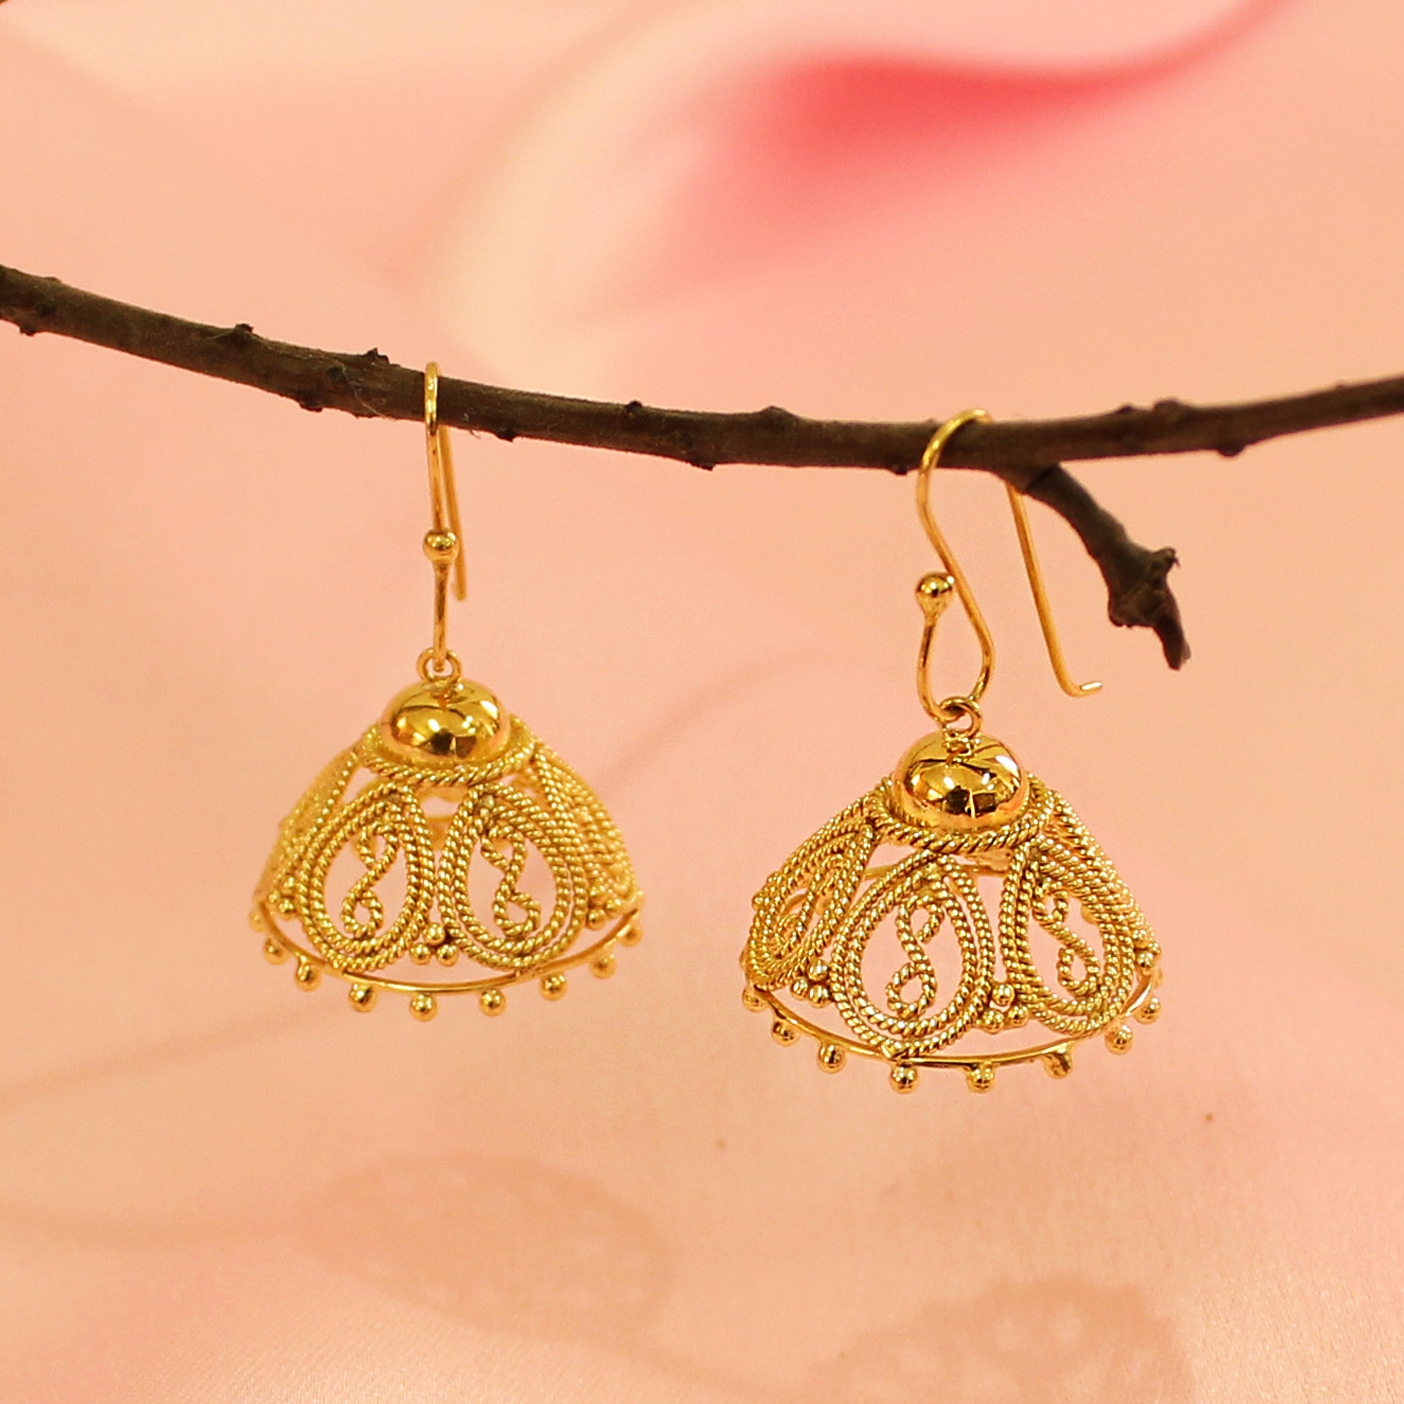 Shop Byzantine 18K Yellow Gold Filigree Jhumki Earrings Online in India